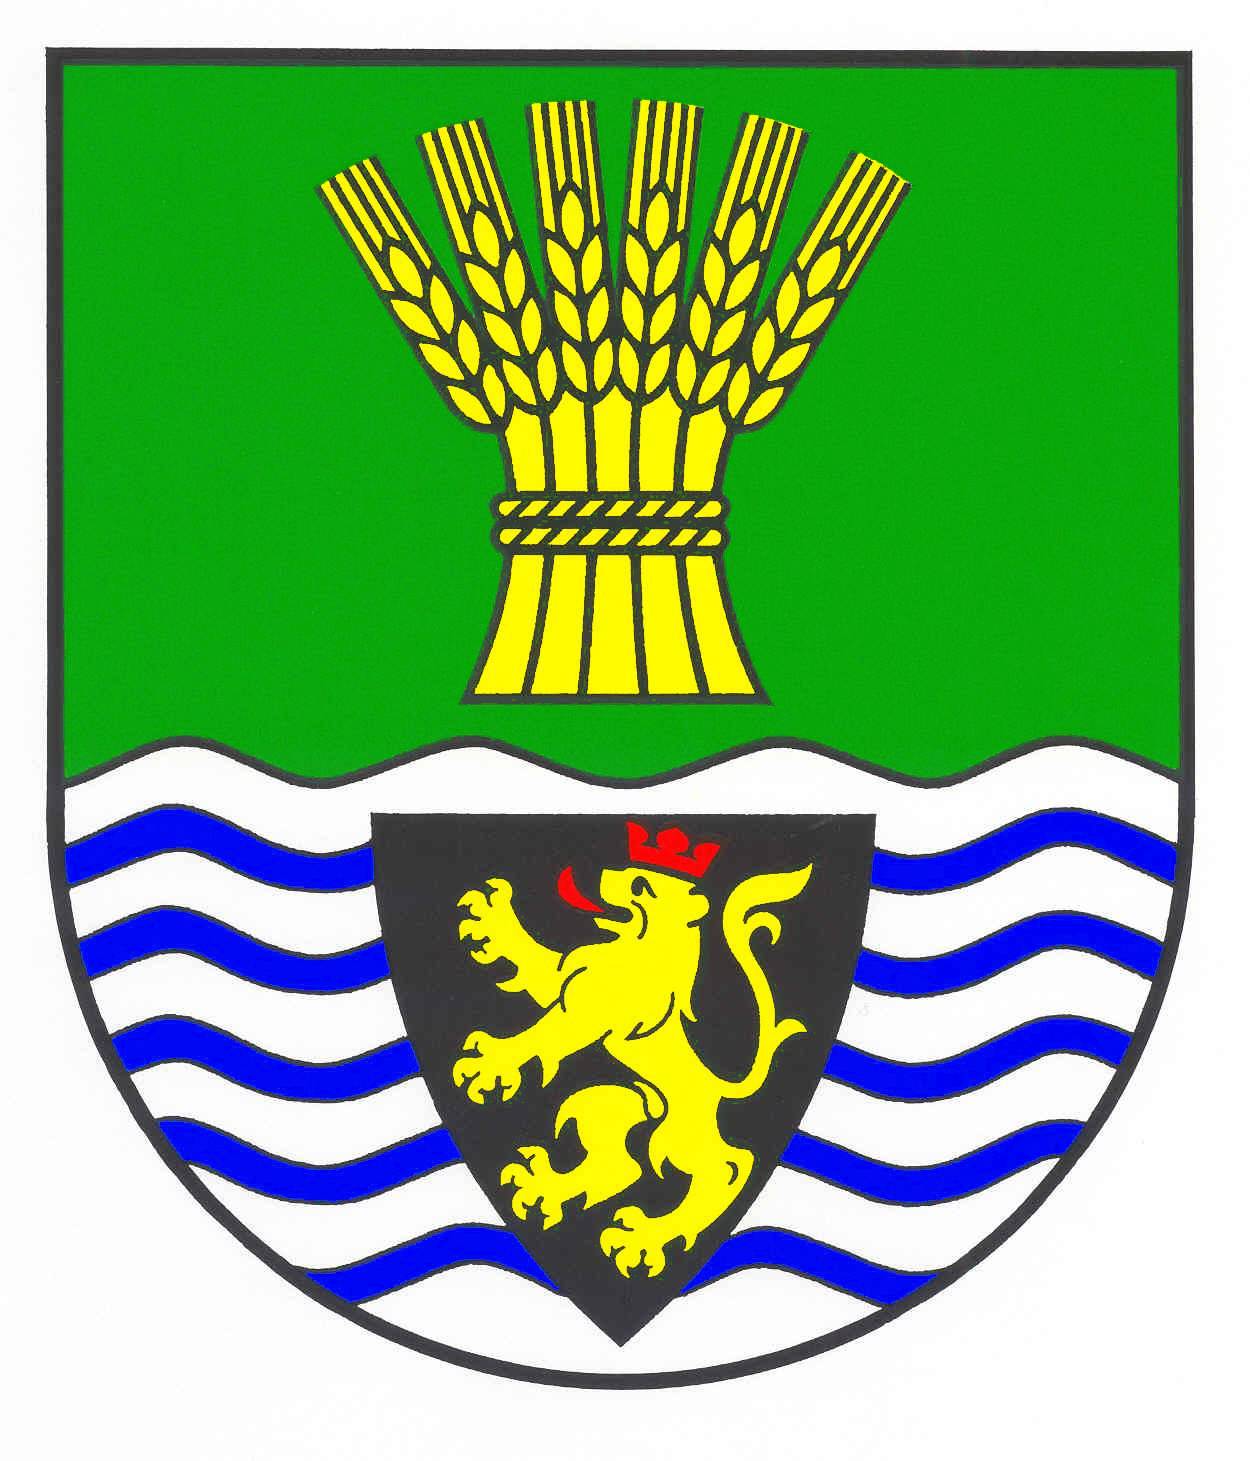 Wappen Gemeinde Reußenköge, Kreis Nordfriesland